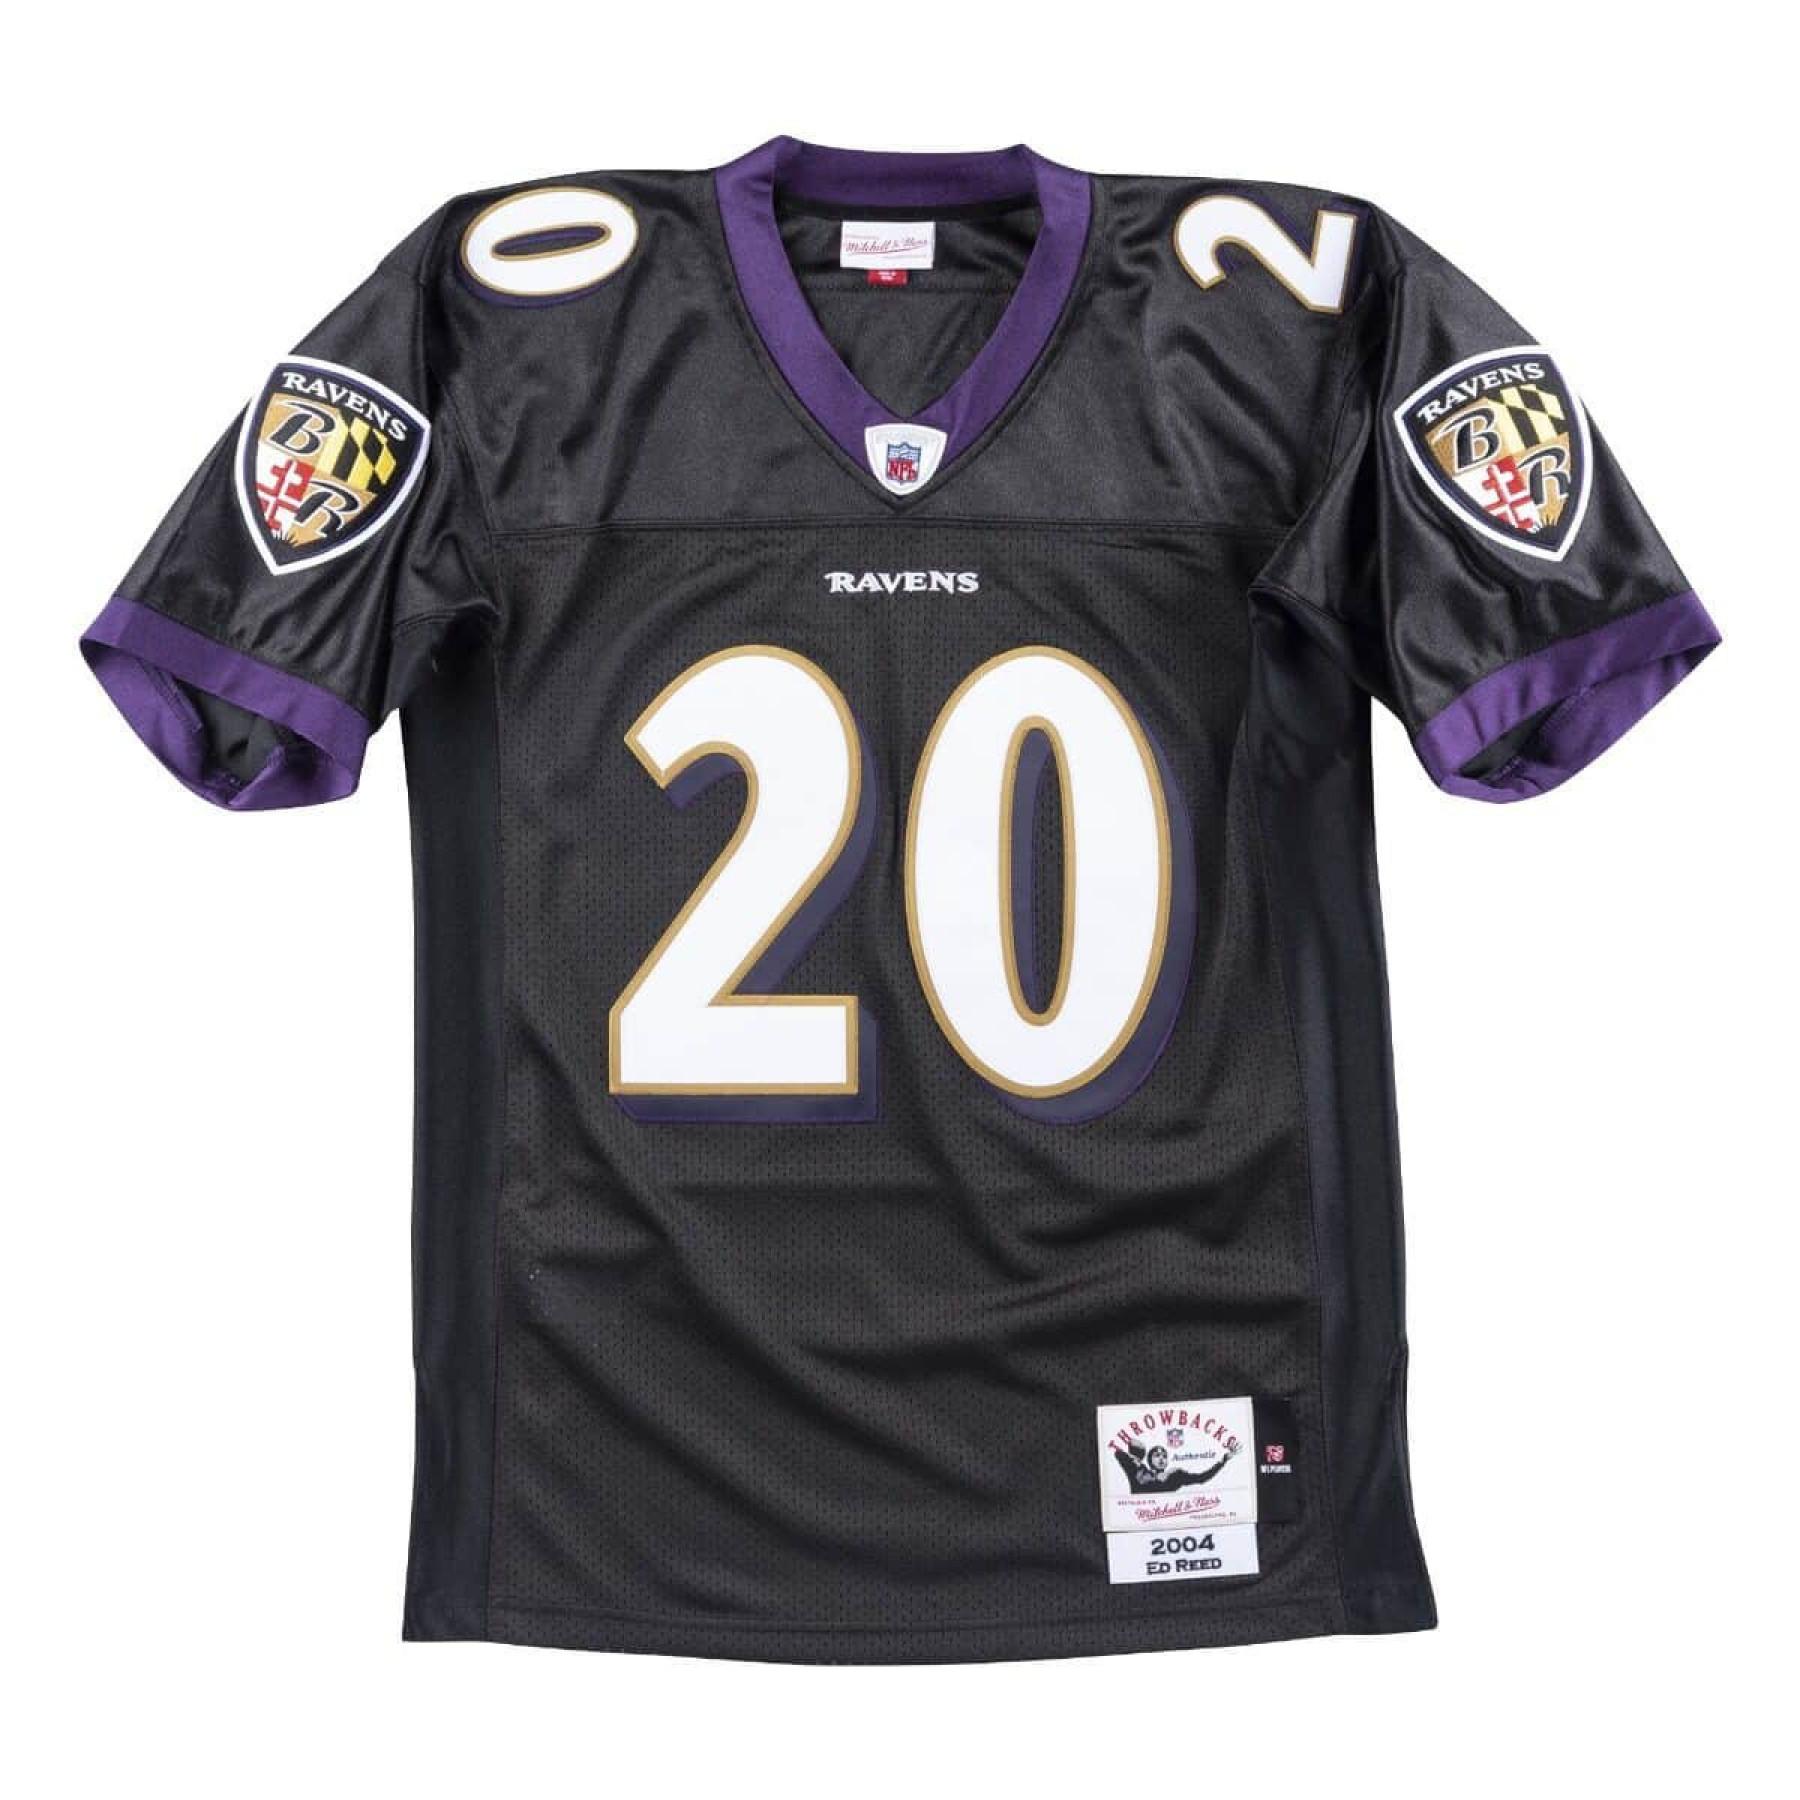 Auténtico jersey Baltimore Ravens Ed Reed